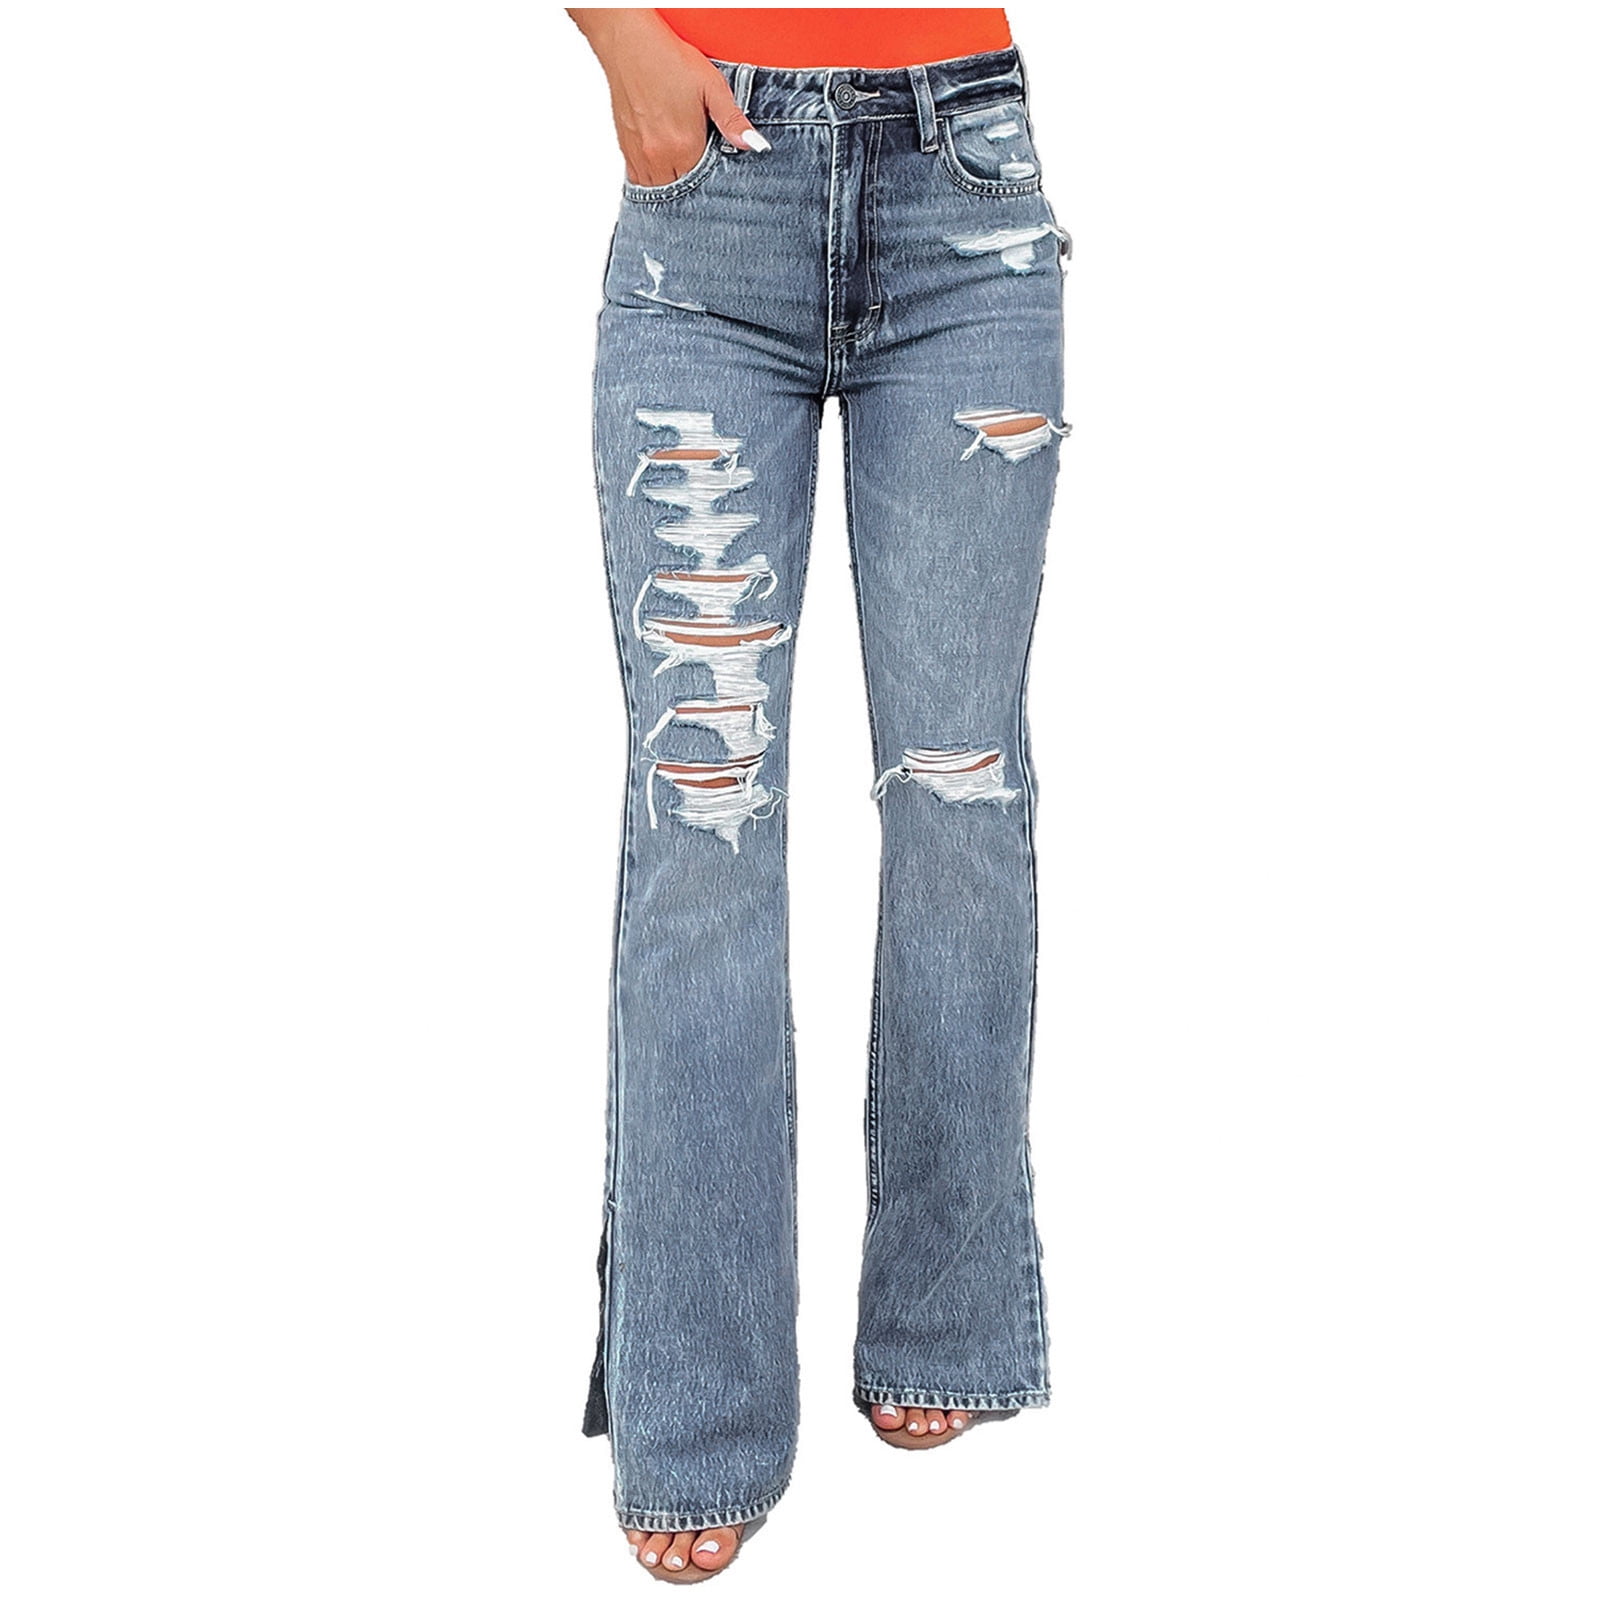 Flare Jeans Women Denim Pants High Waisted Slit Leg Vintage